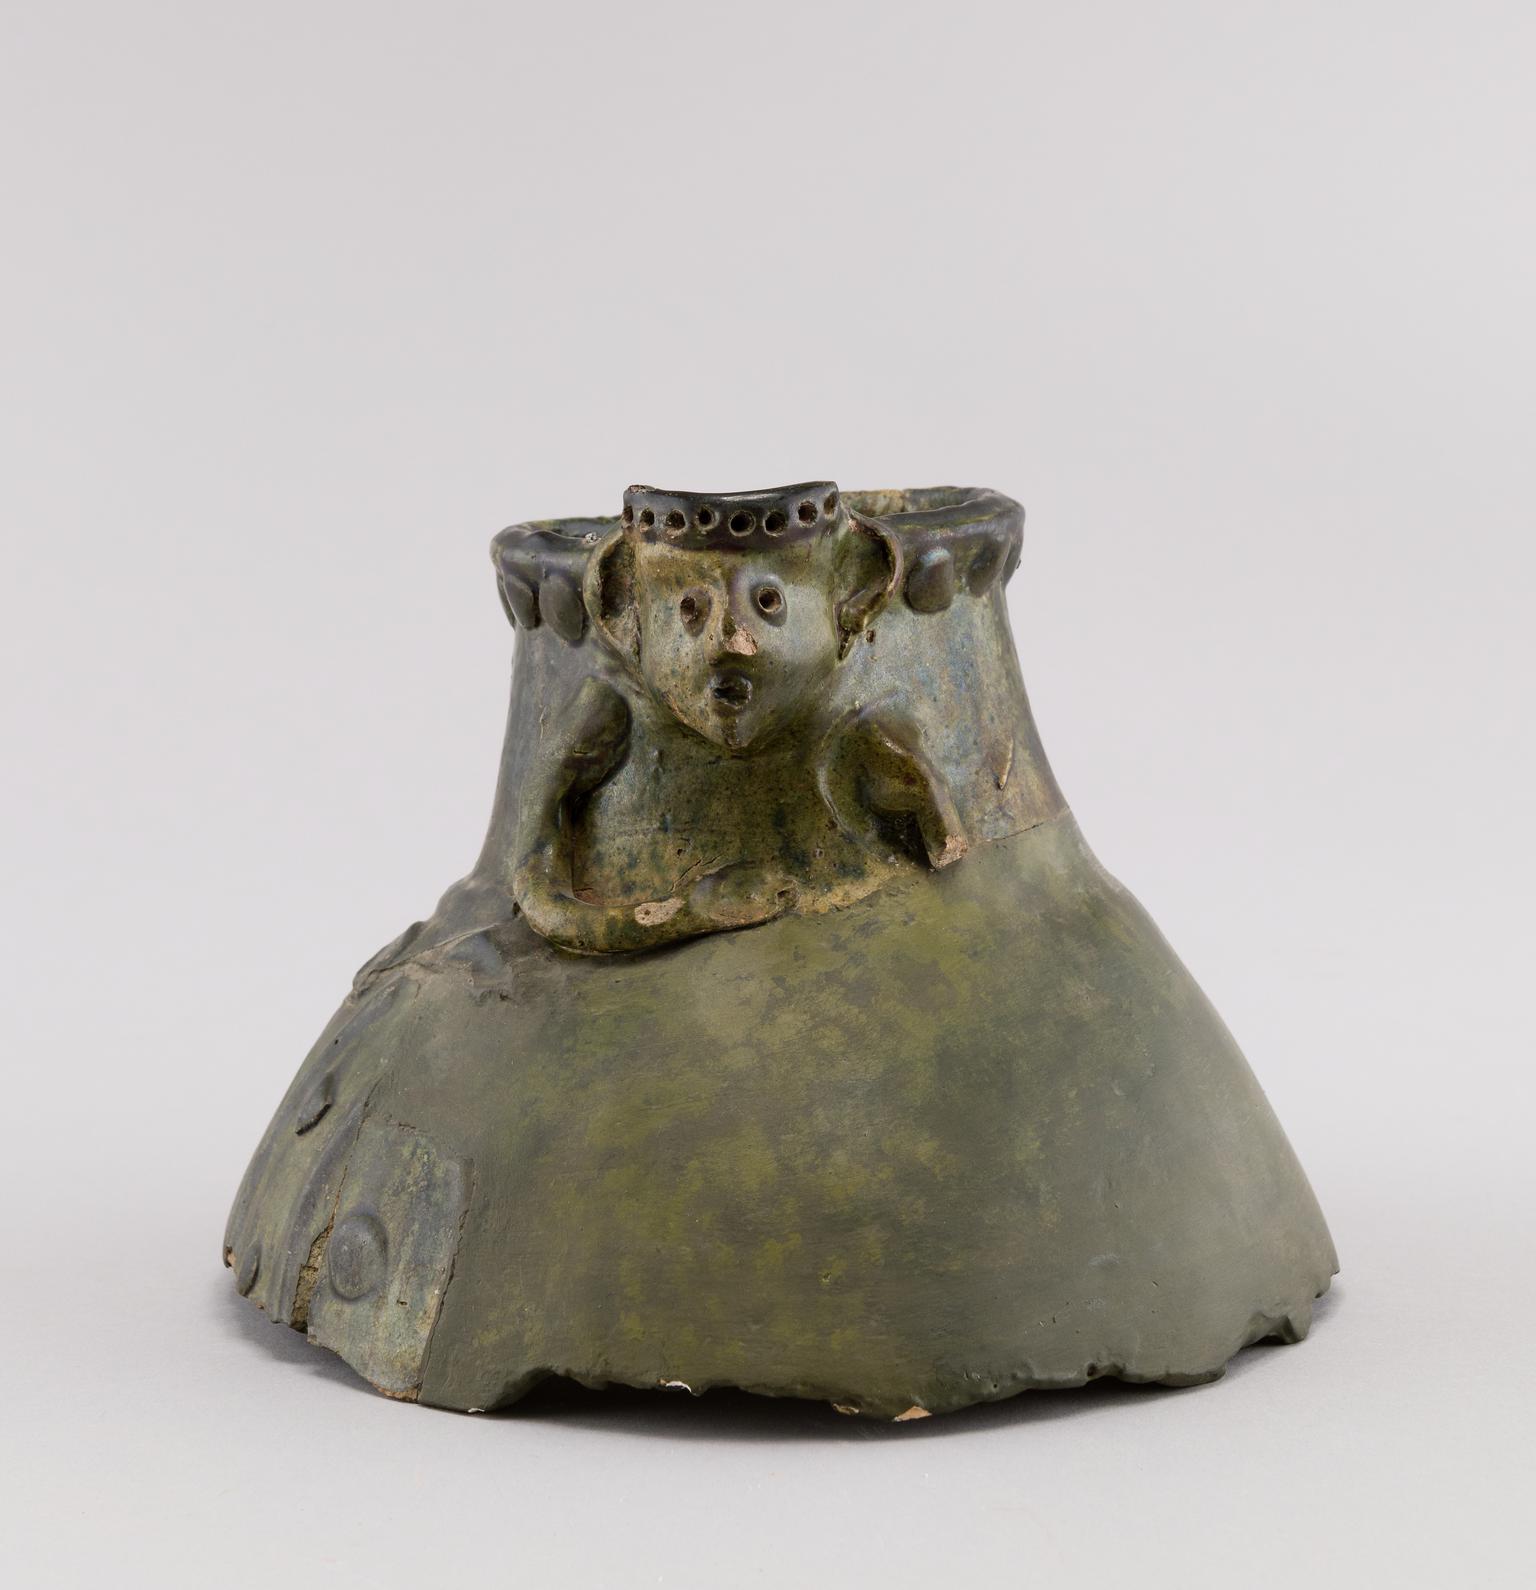 Medieval pottery jug